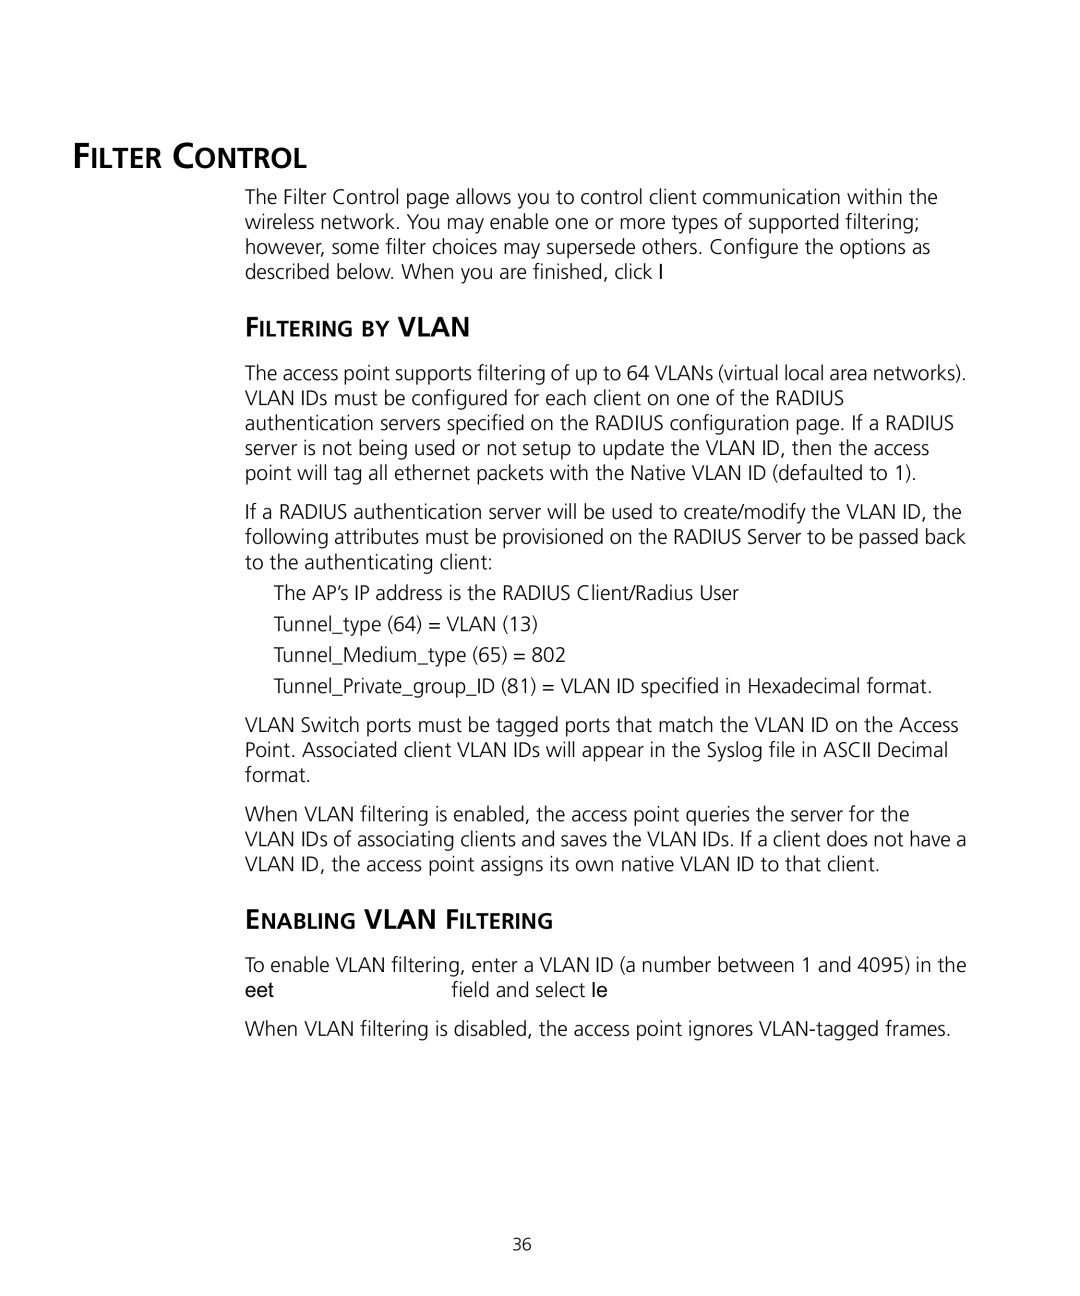 3Com WL-455 manual Filter Control, Filtering by Vlan, Enabling Vlan Filtering 